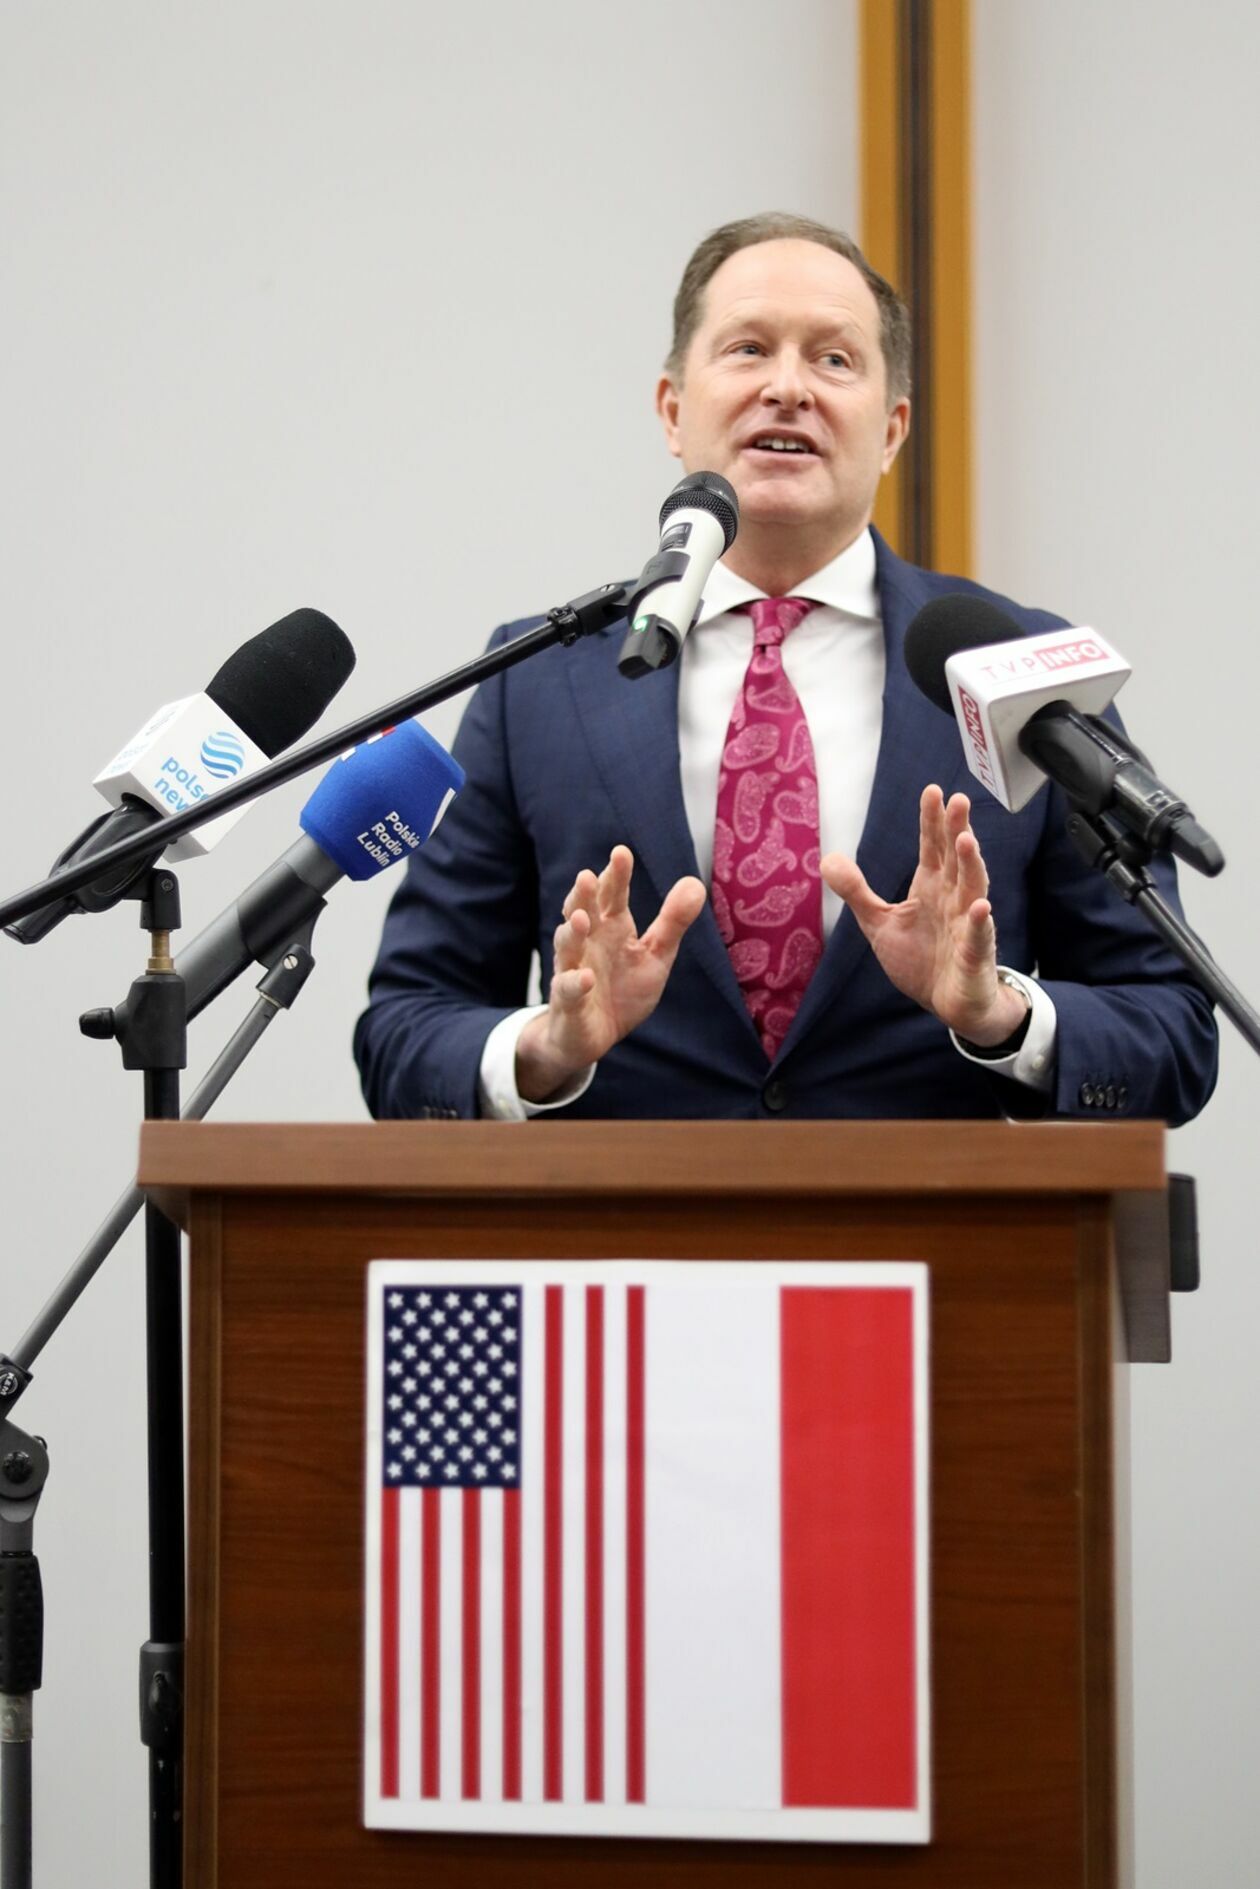  Ambasador USA Mark Brzezinski na UMCS (zdjęcie 9) - Autor: Klaudia Olender / UMCS